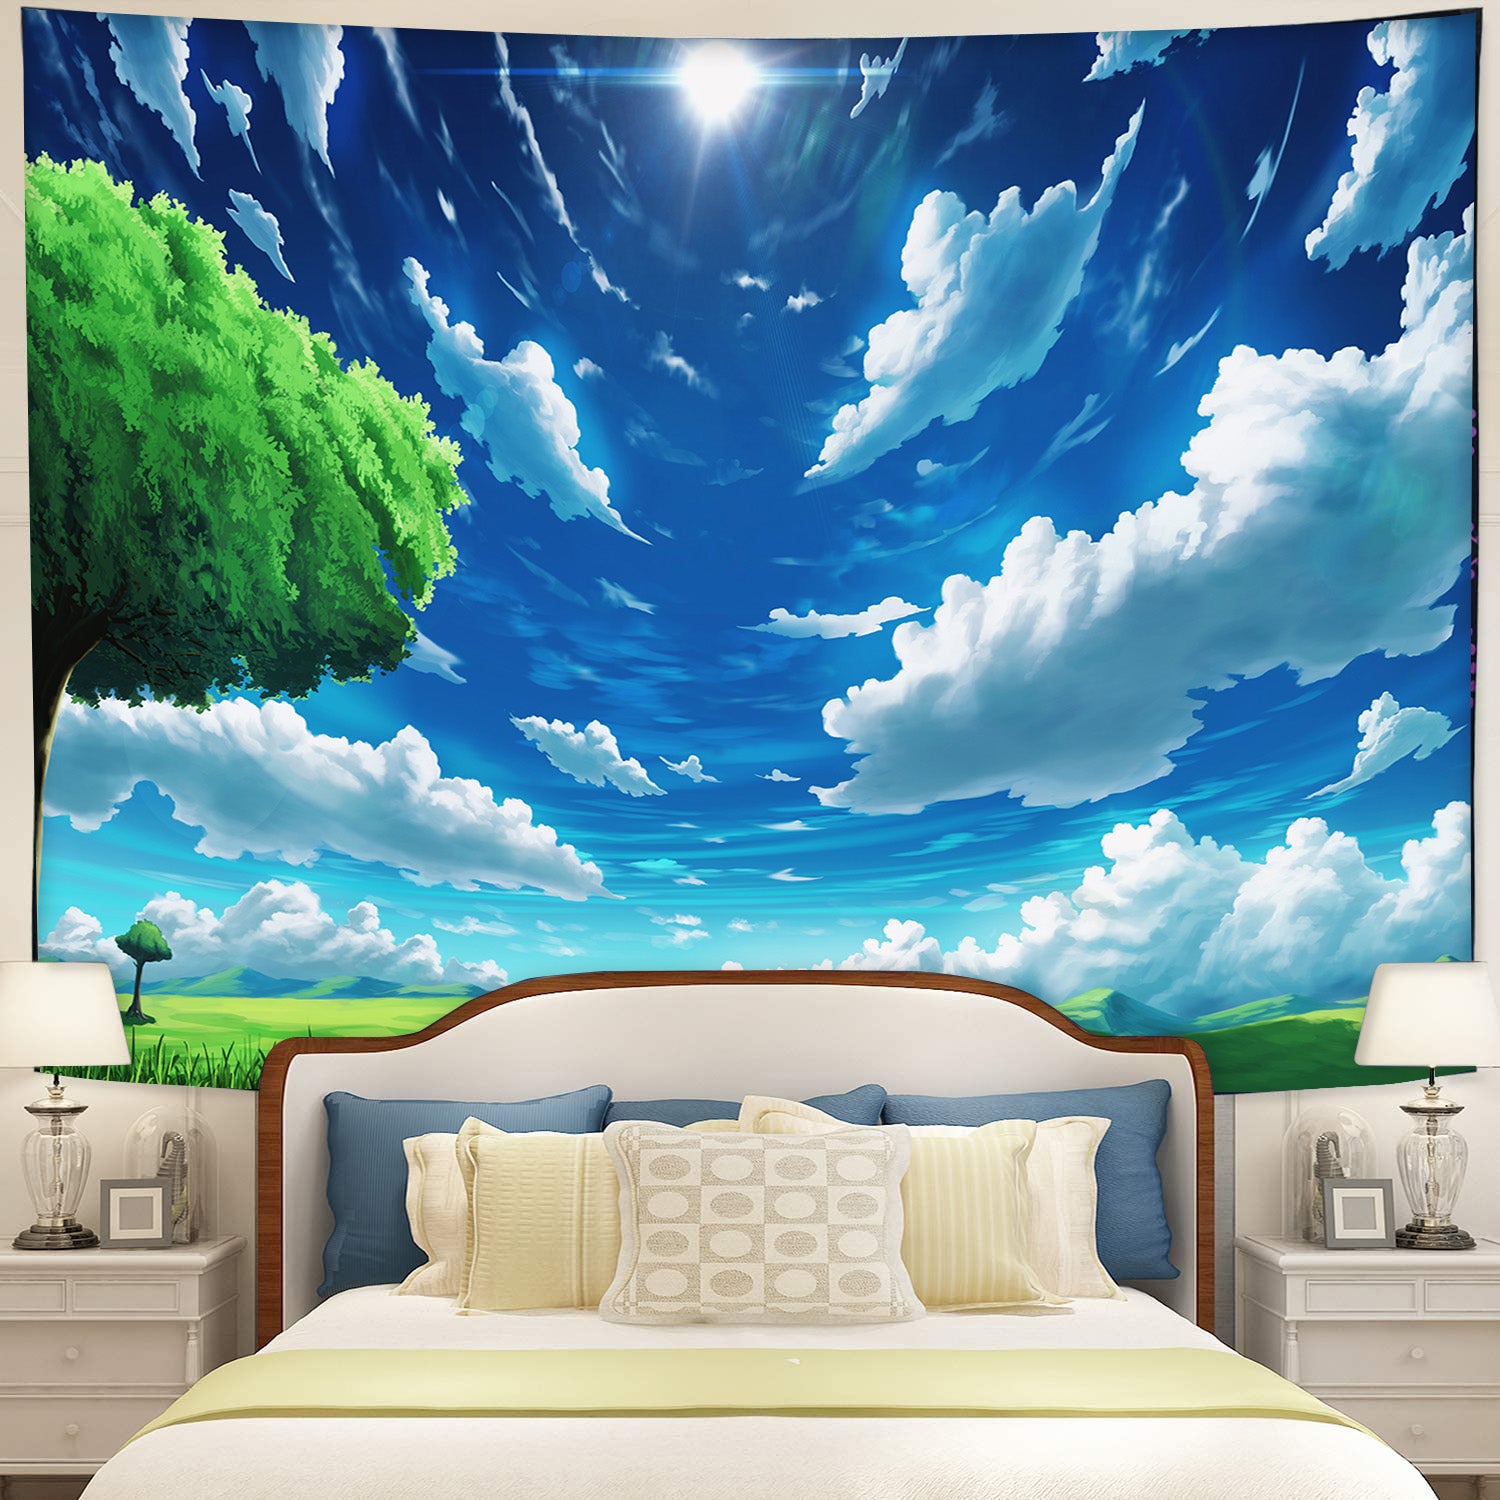 Anime Sky Tapestry Room Decor